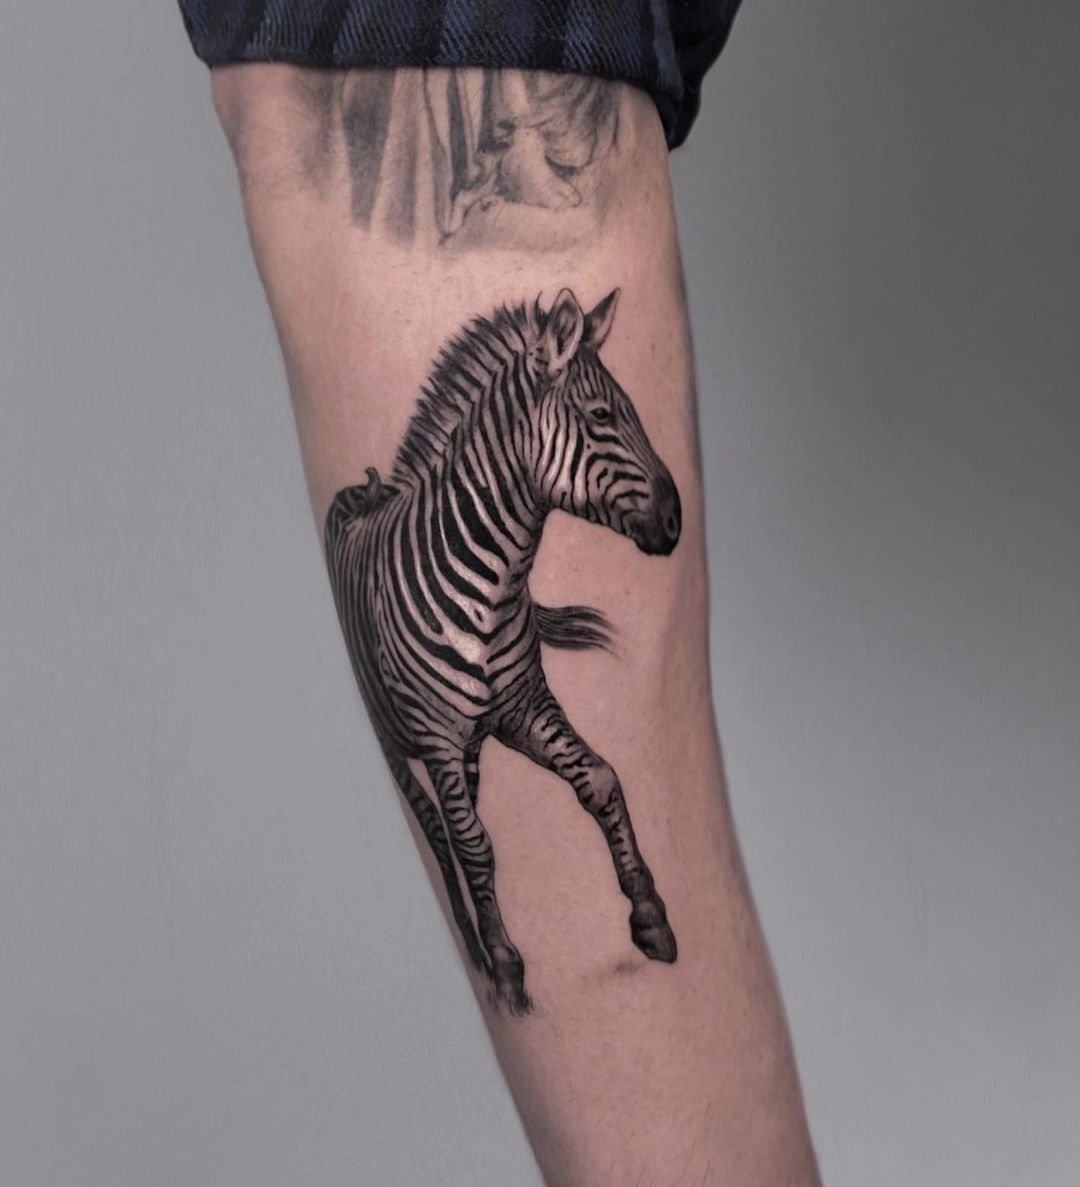 Amazing realistic zebra tattoo design by martinabilli illustration